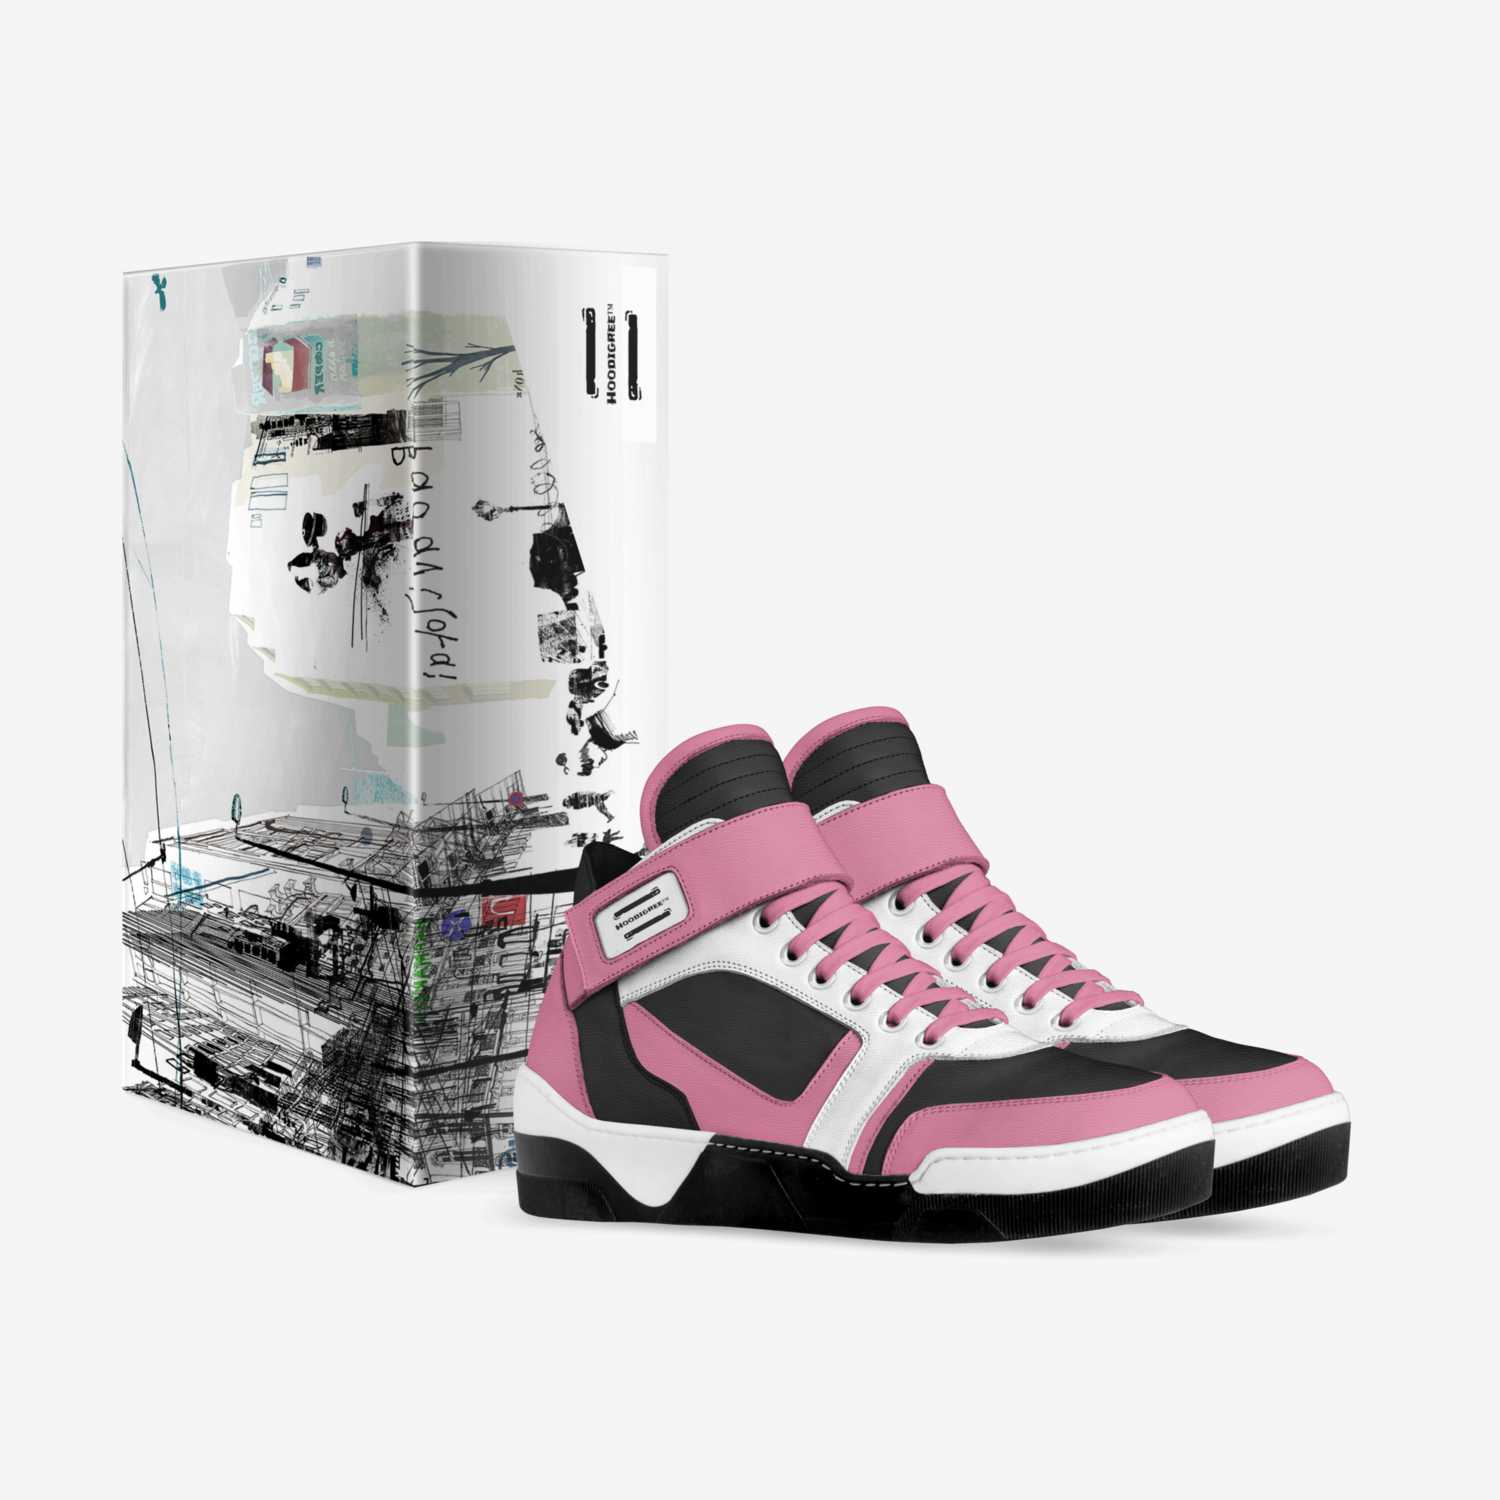 Hoodigree™ custom made in Italy shoes by Prince Darius | Box view